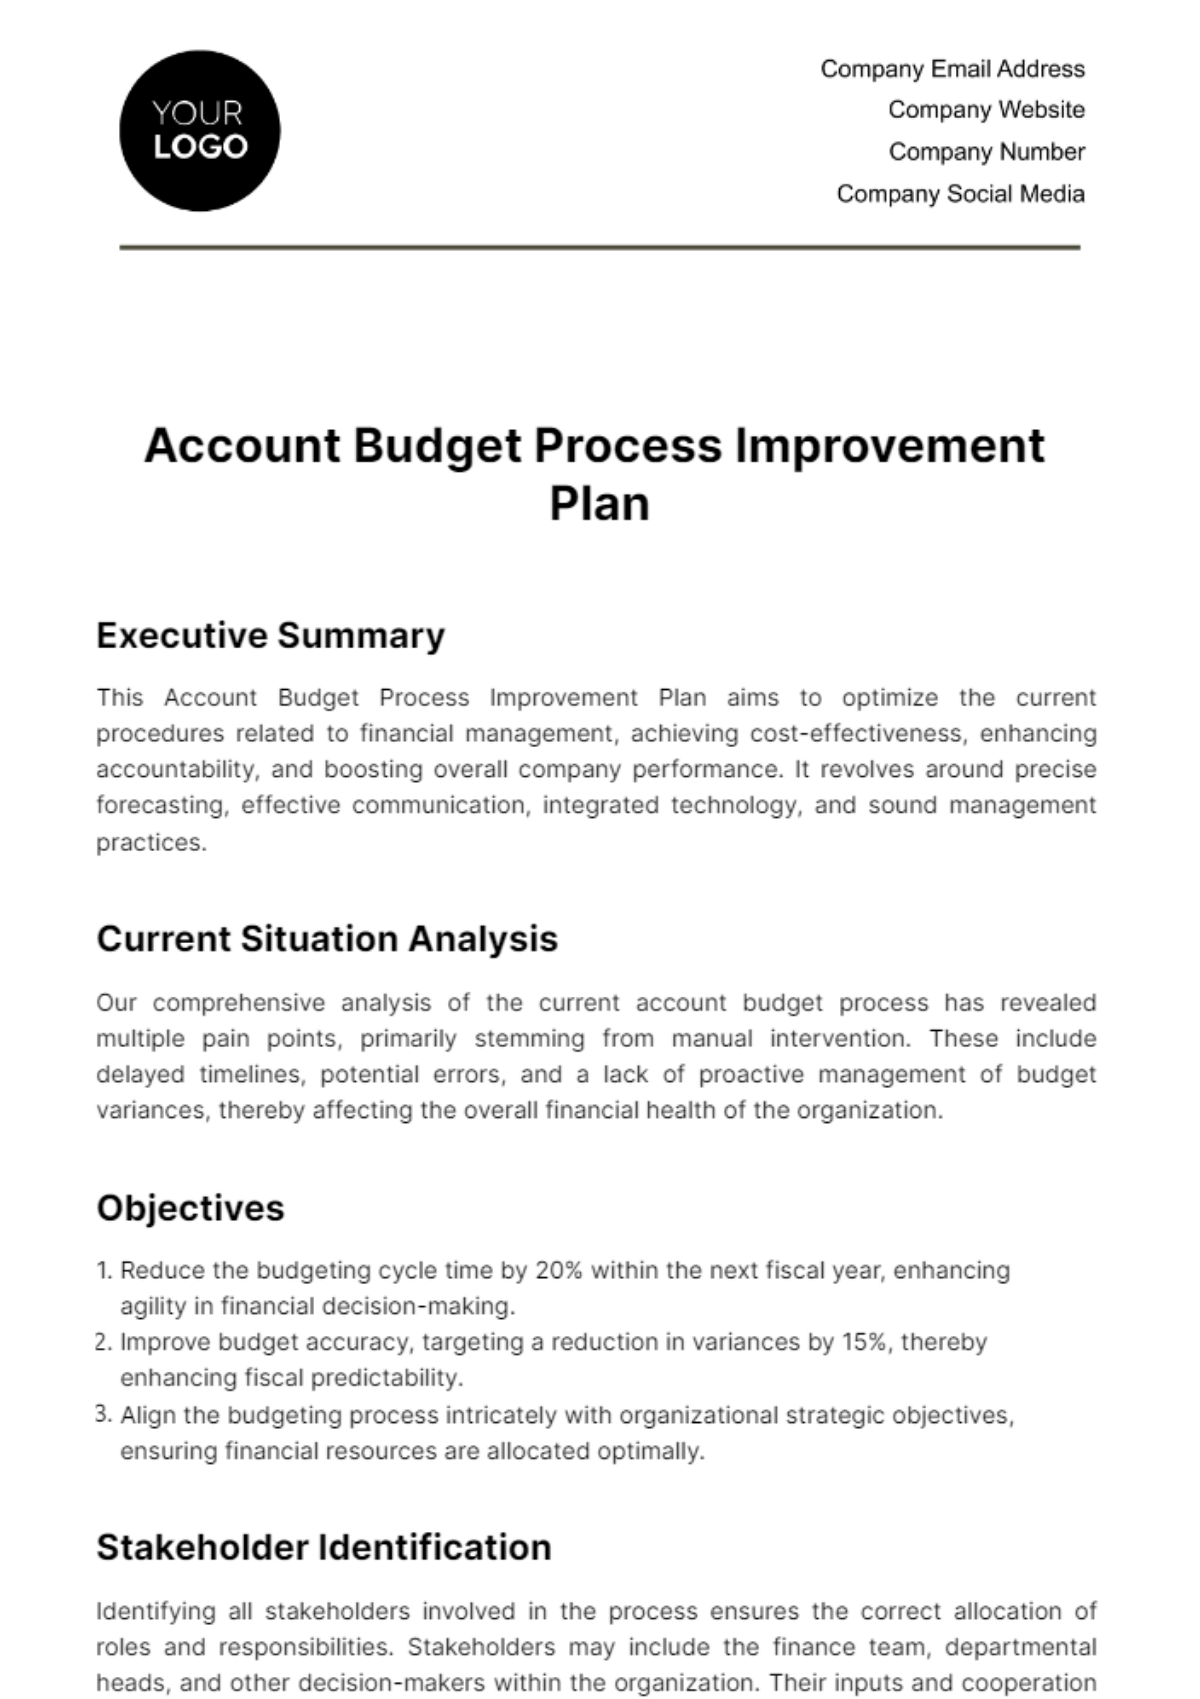 Free Account Budget Process Improvement Plan Template